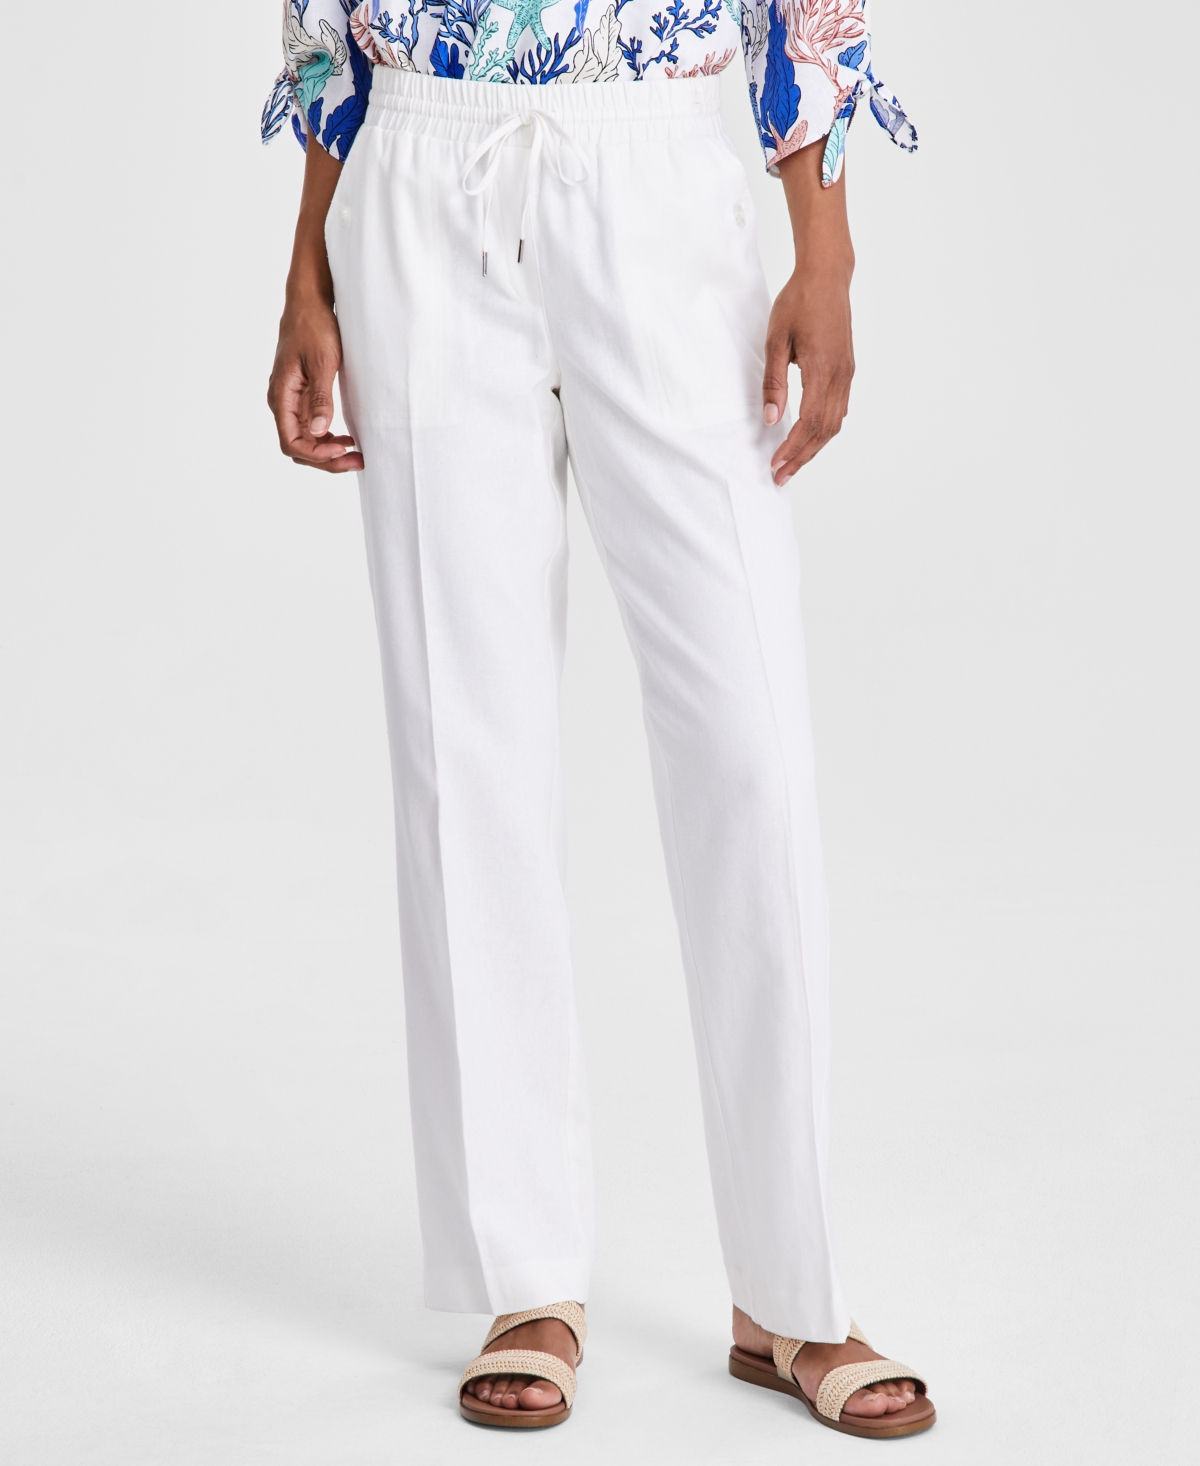 Women's Linen Drawstring-Waist Buttoned-Pocket Pants - Pacific Navy